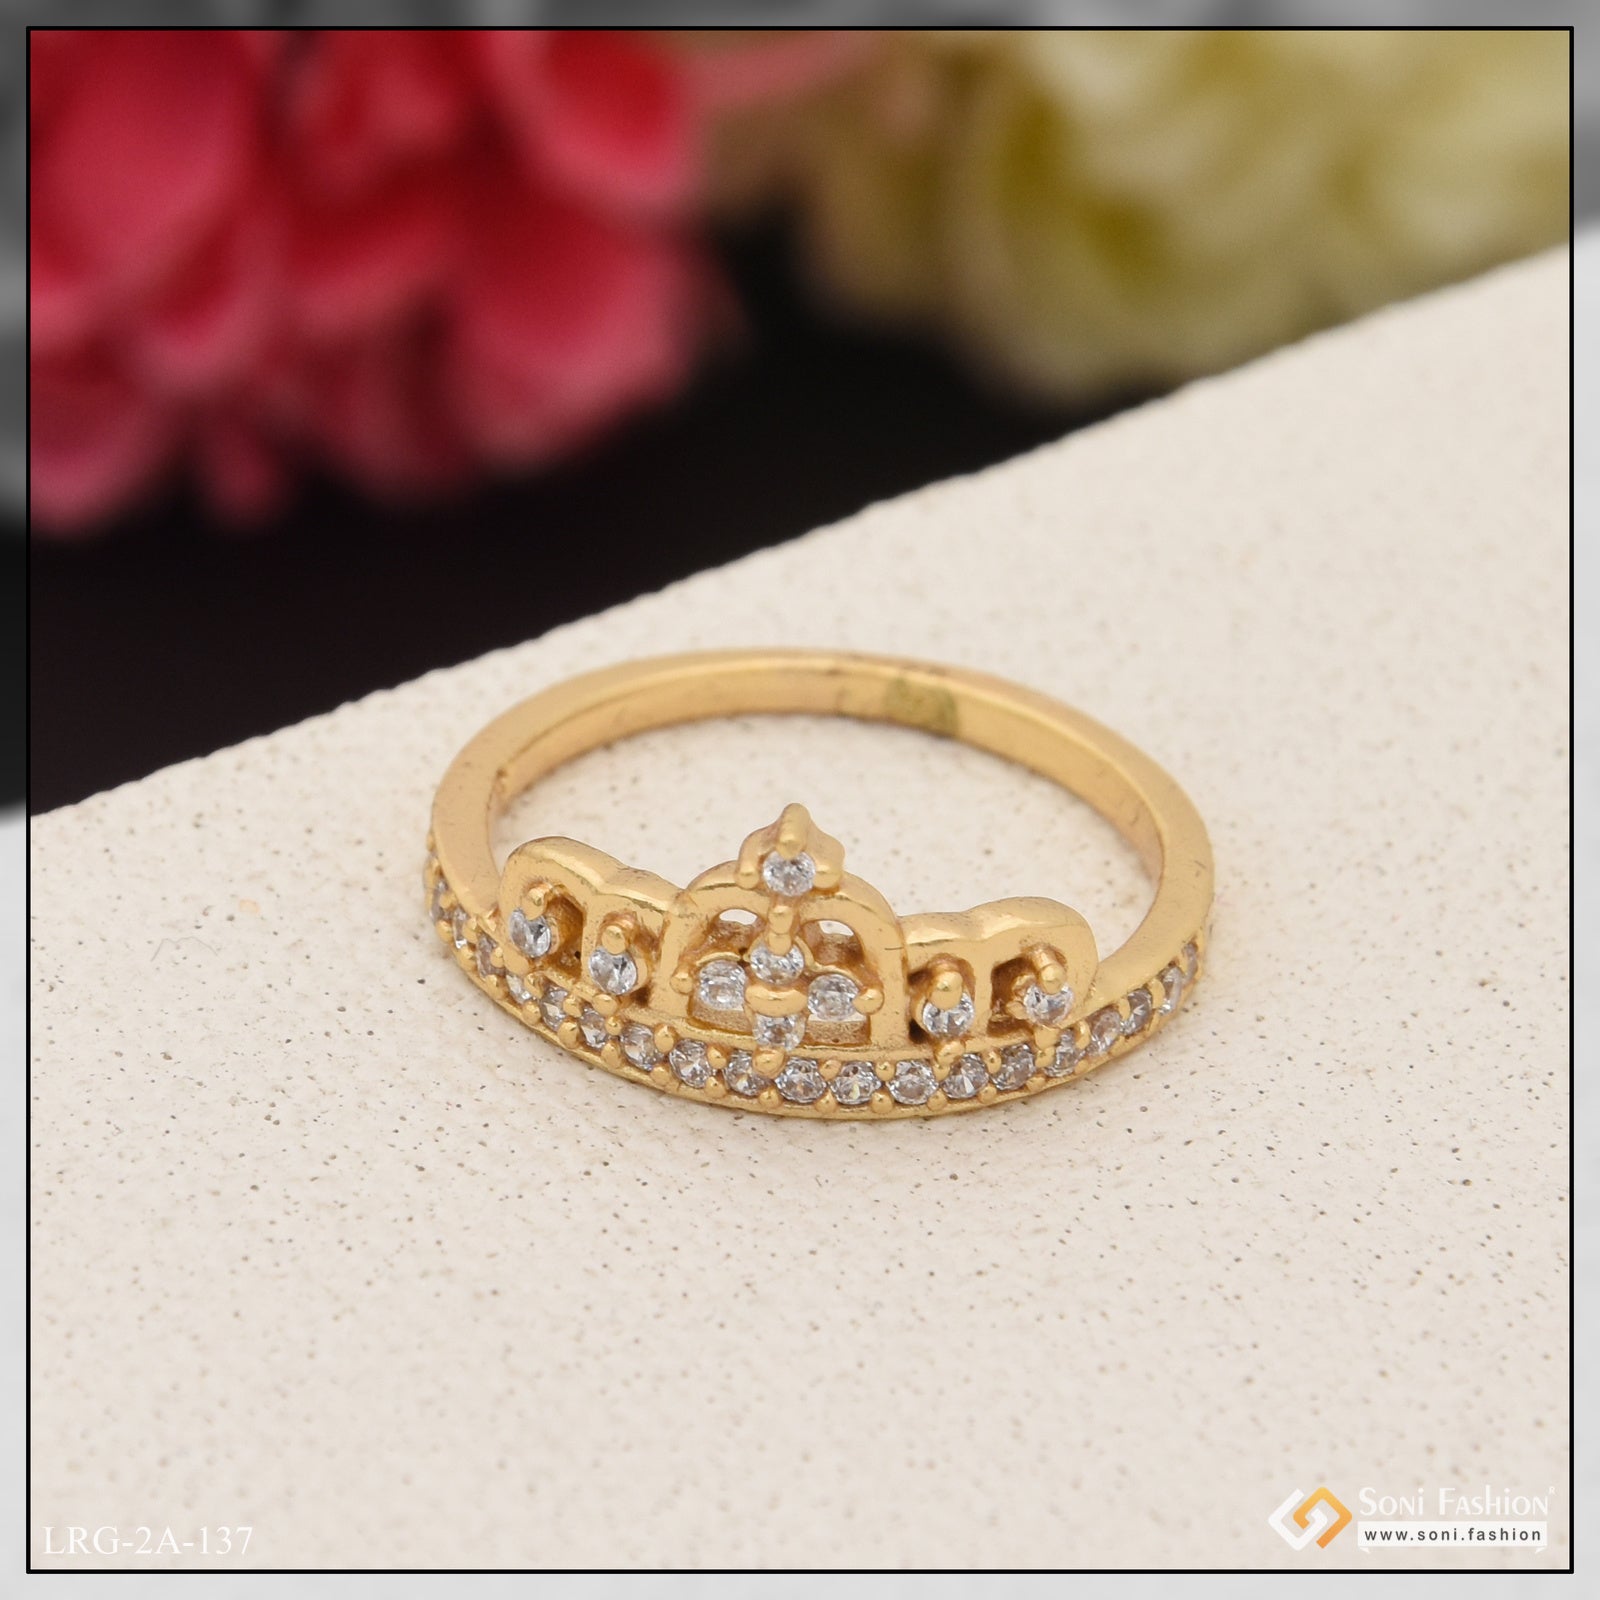 The Elegant Moon Diamond Ring